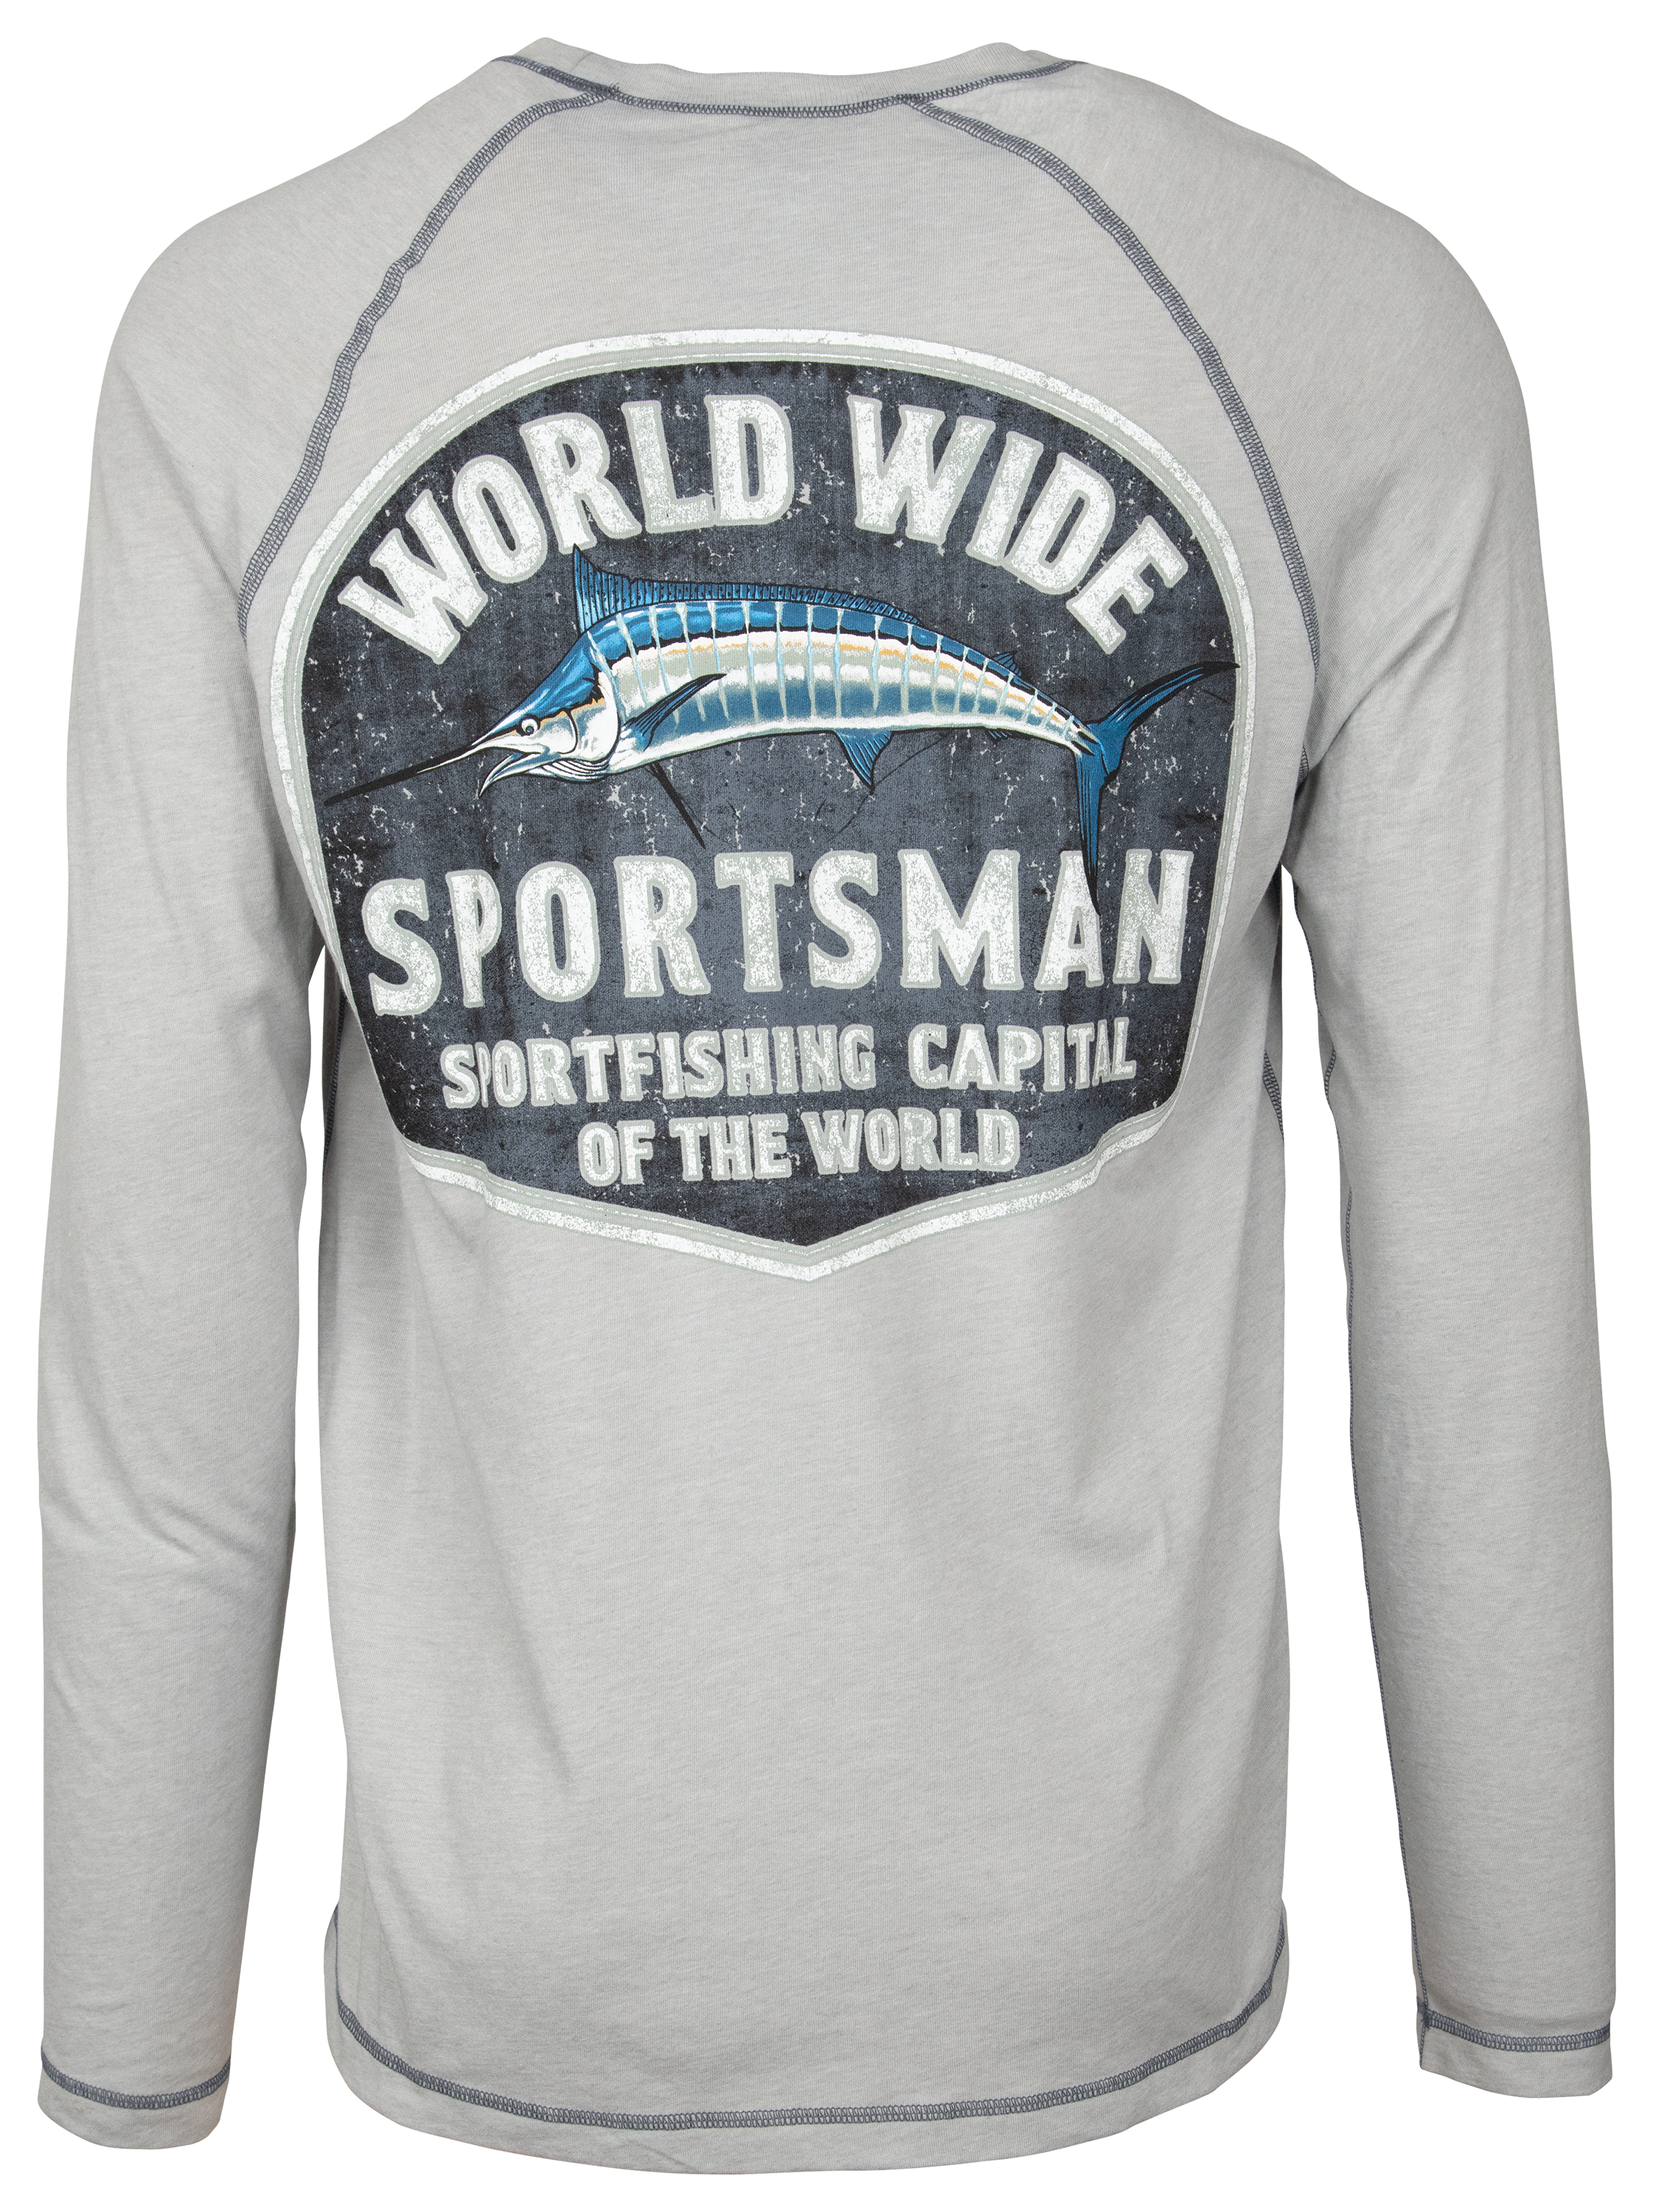 World Wide Sportsman Angler Long-Sleeve Crew-Neck Shirt for Ladies - Porcelain - XL